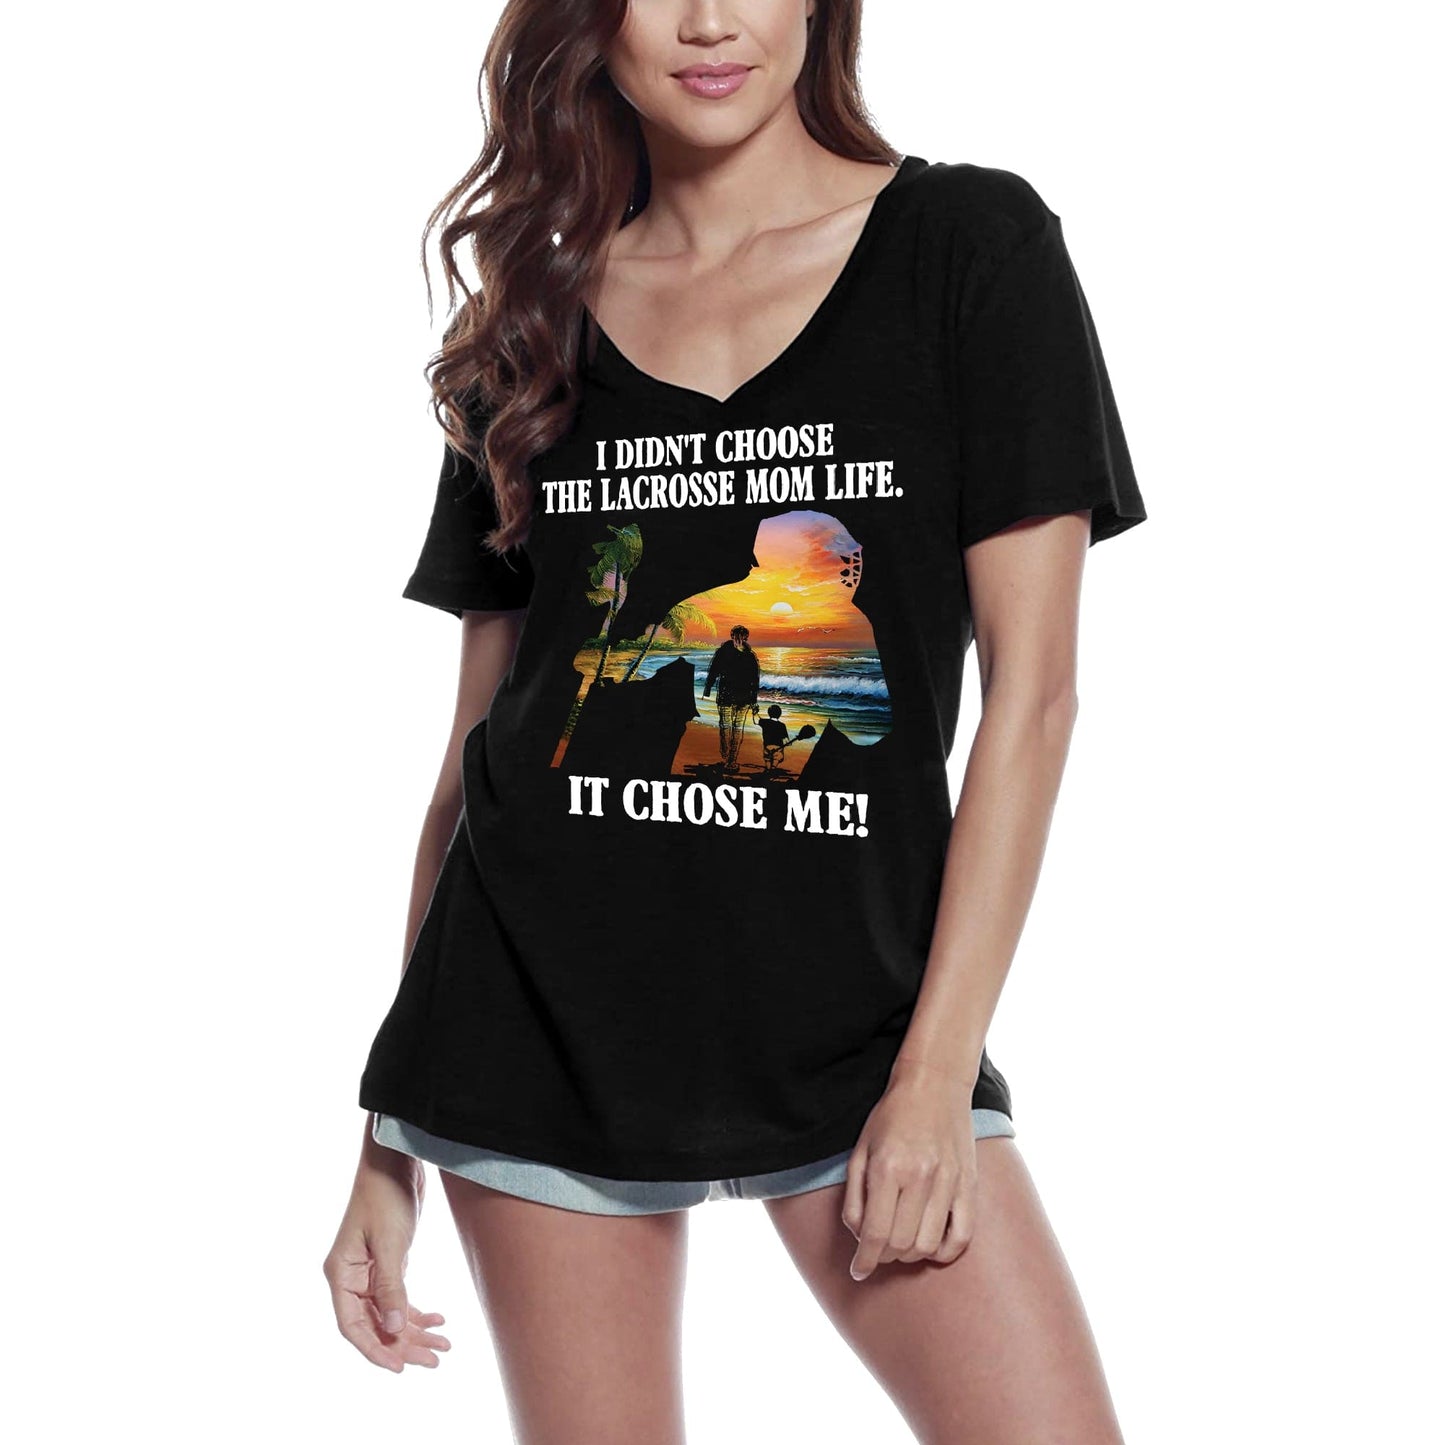 ULTRABASIC Women's T-Shirt I Didn't Choose the Lacrosse Mom Life - Funny Mother Tee Shirt